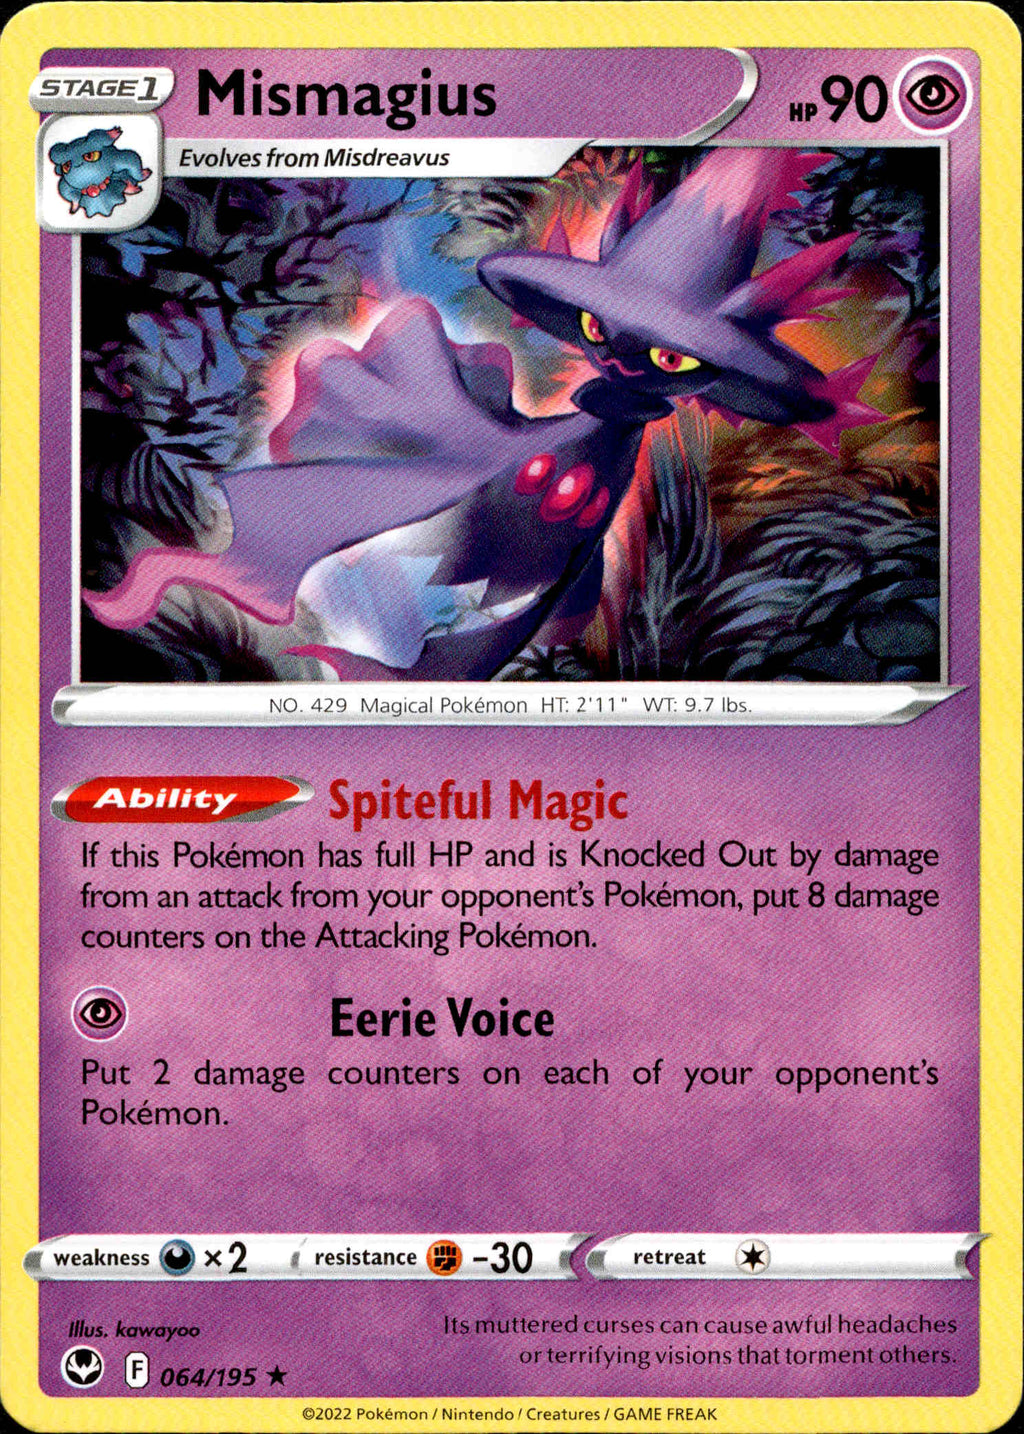 Morpeko 116/195 in Portuguese Silver Tempest Pokémon TCG